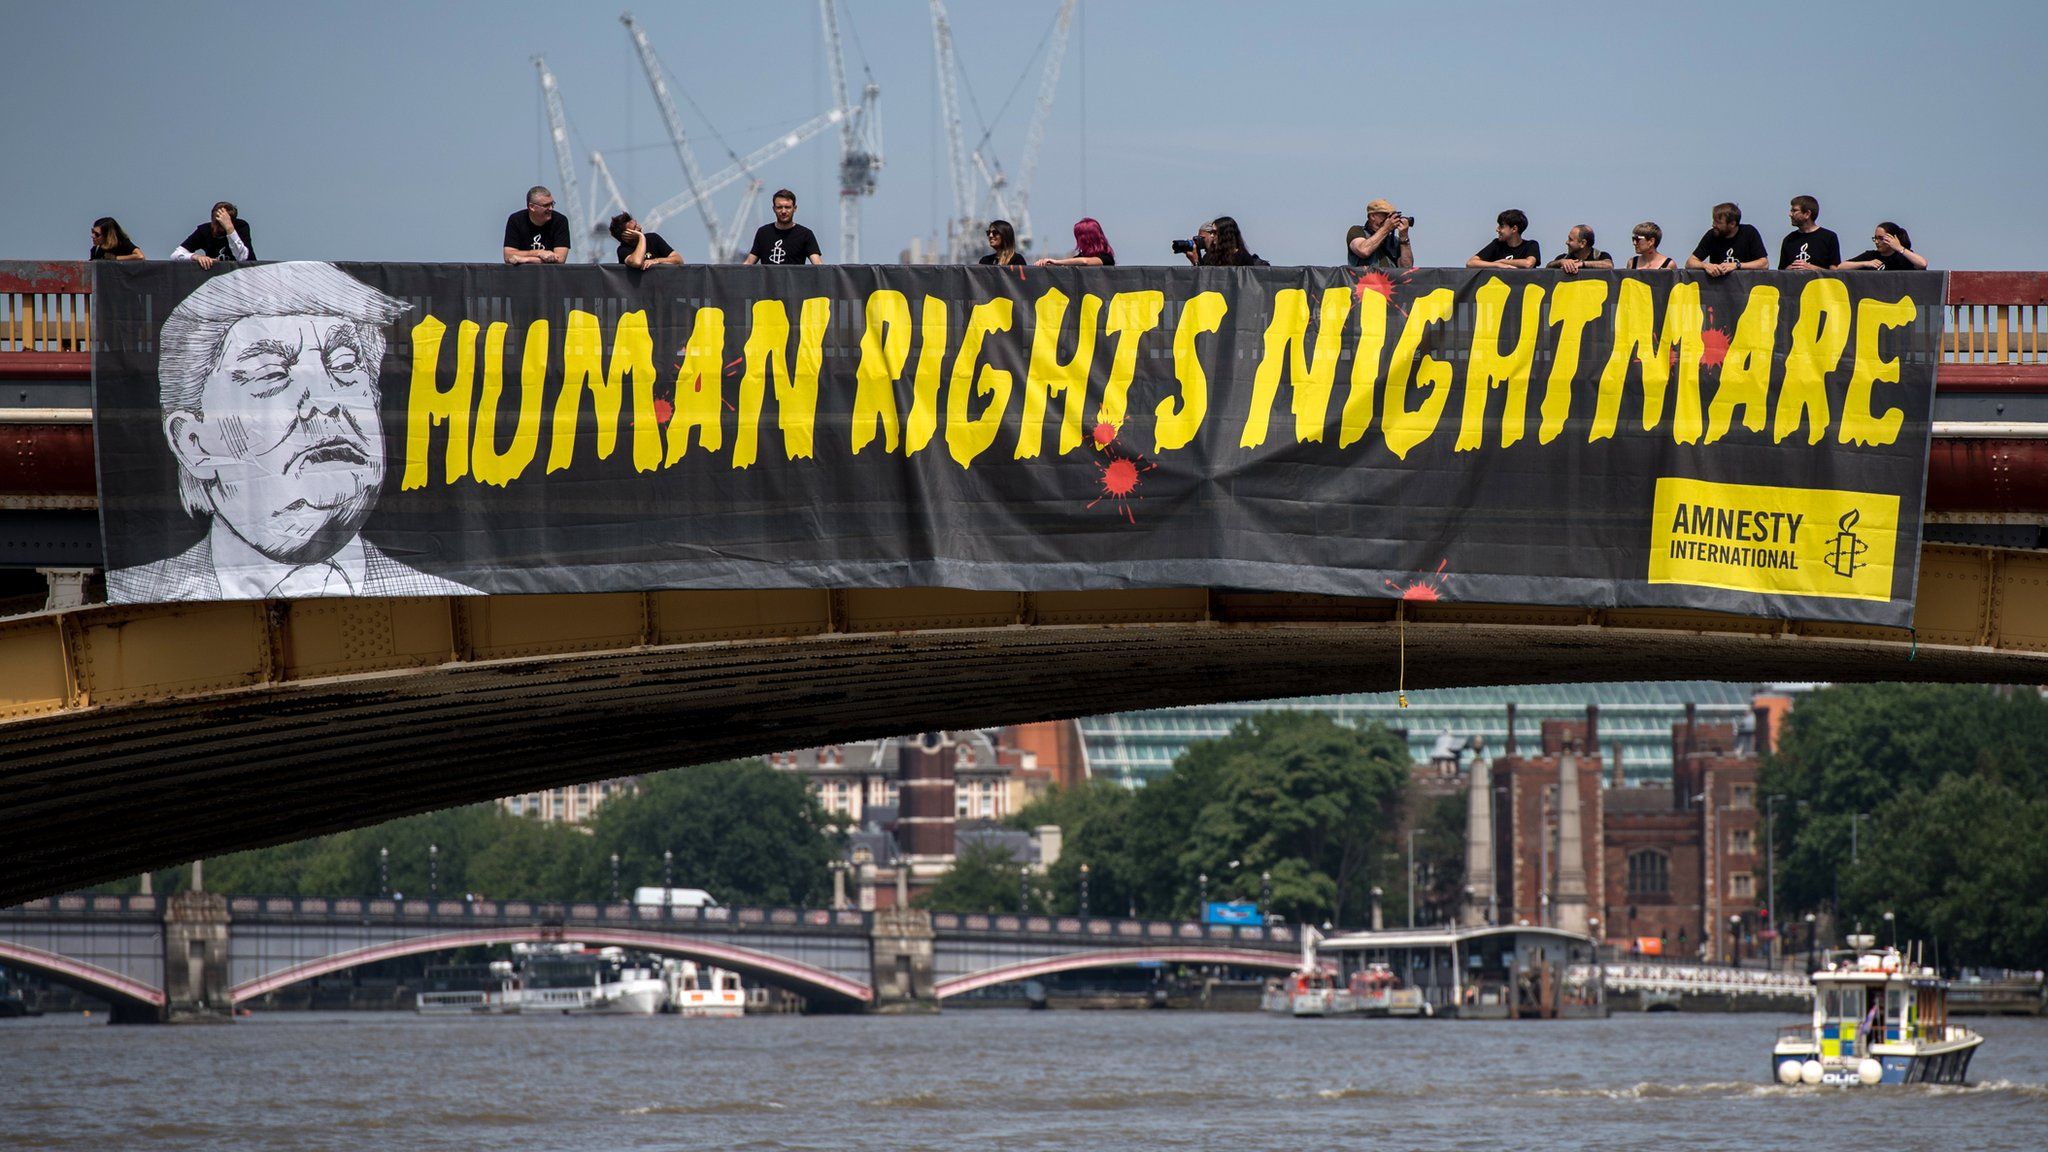 Protest on a Thames bridge